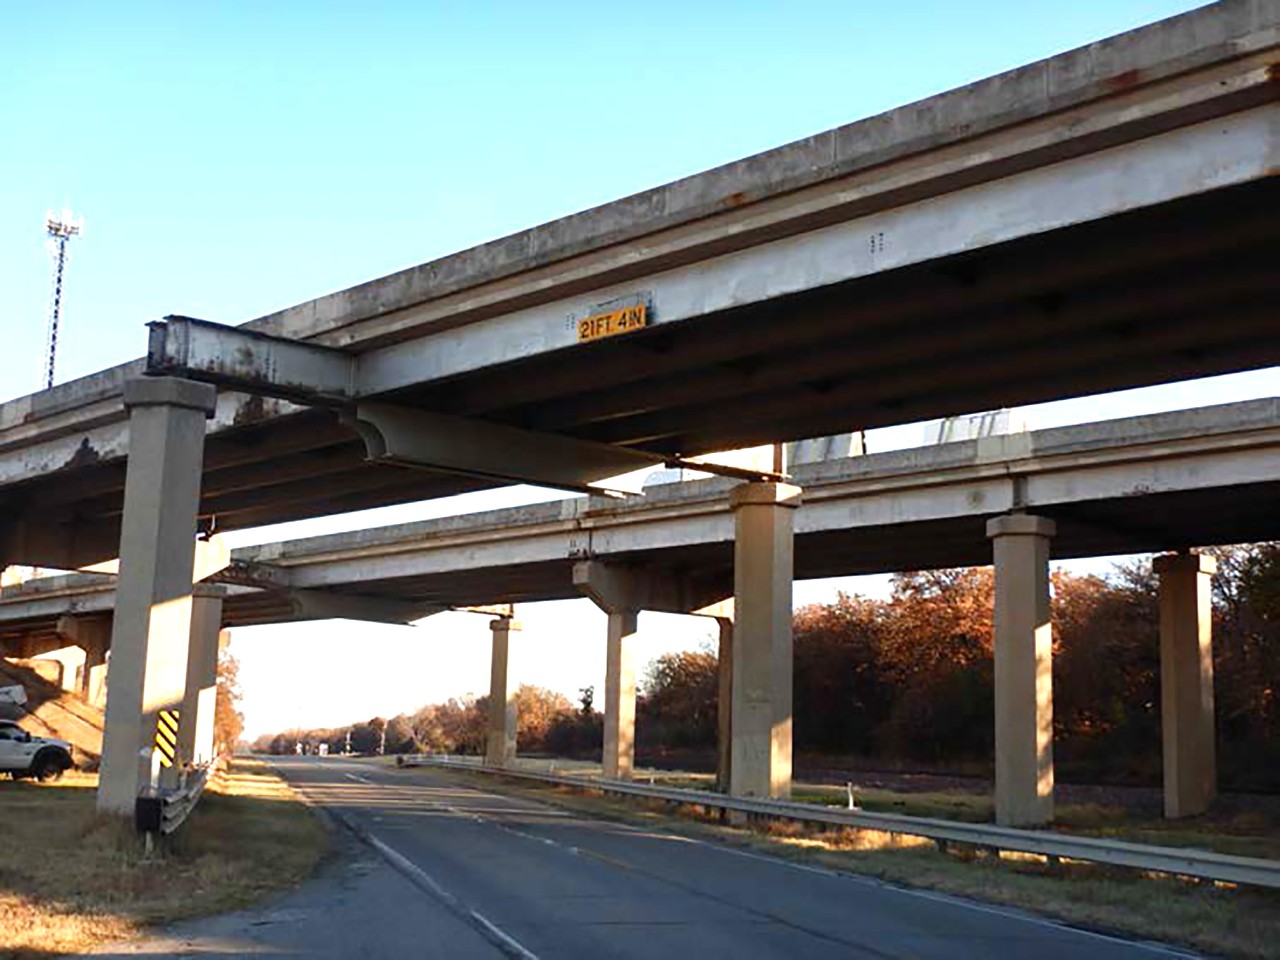 I-35 bridges over US-77 near Thackerville in Love Co. 